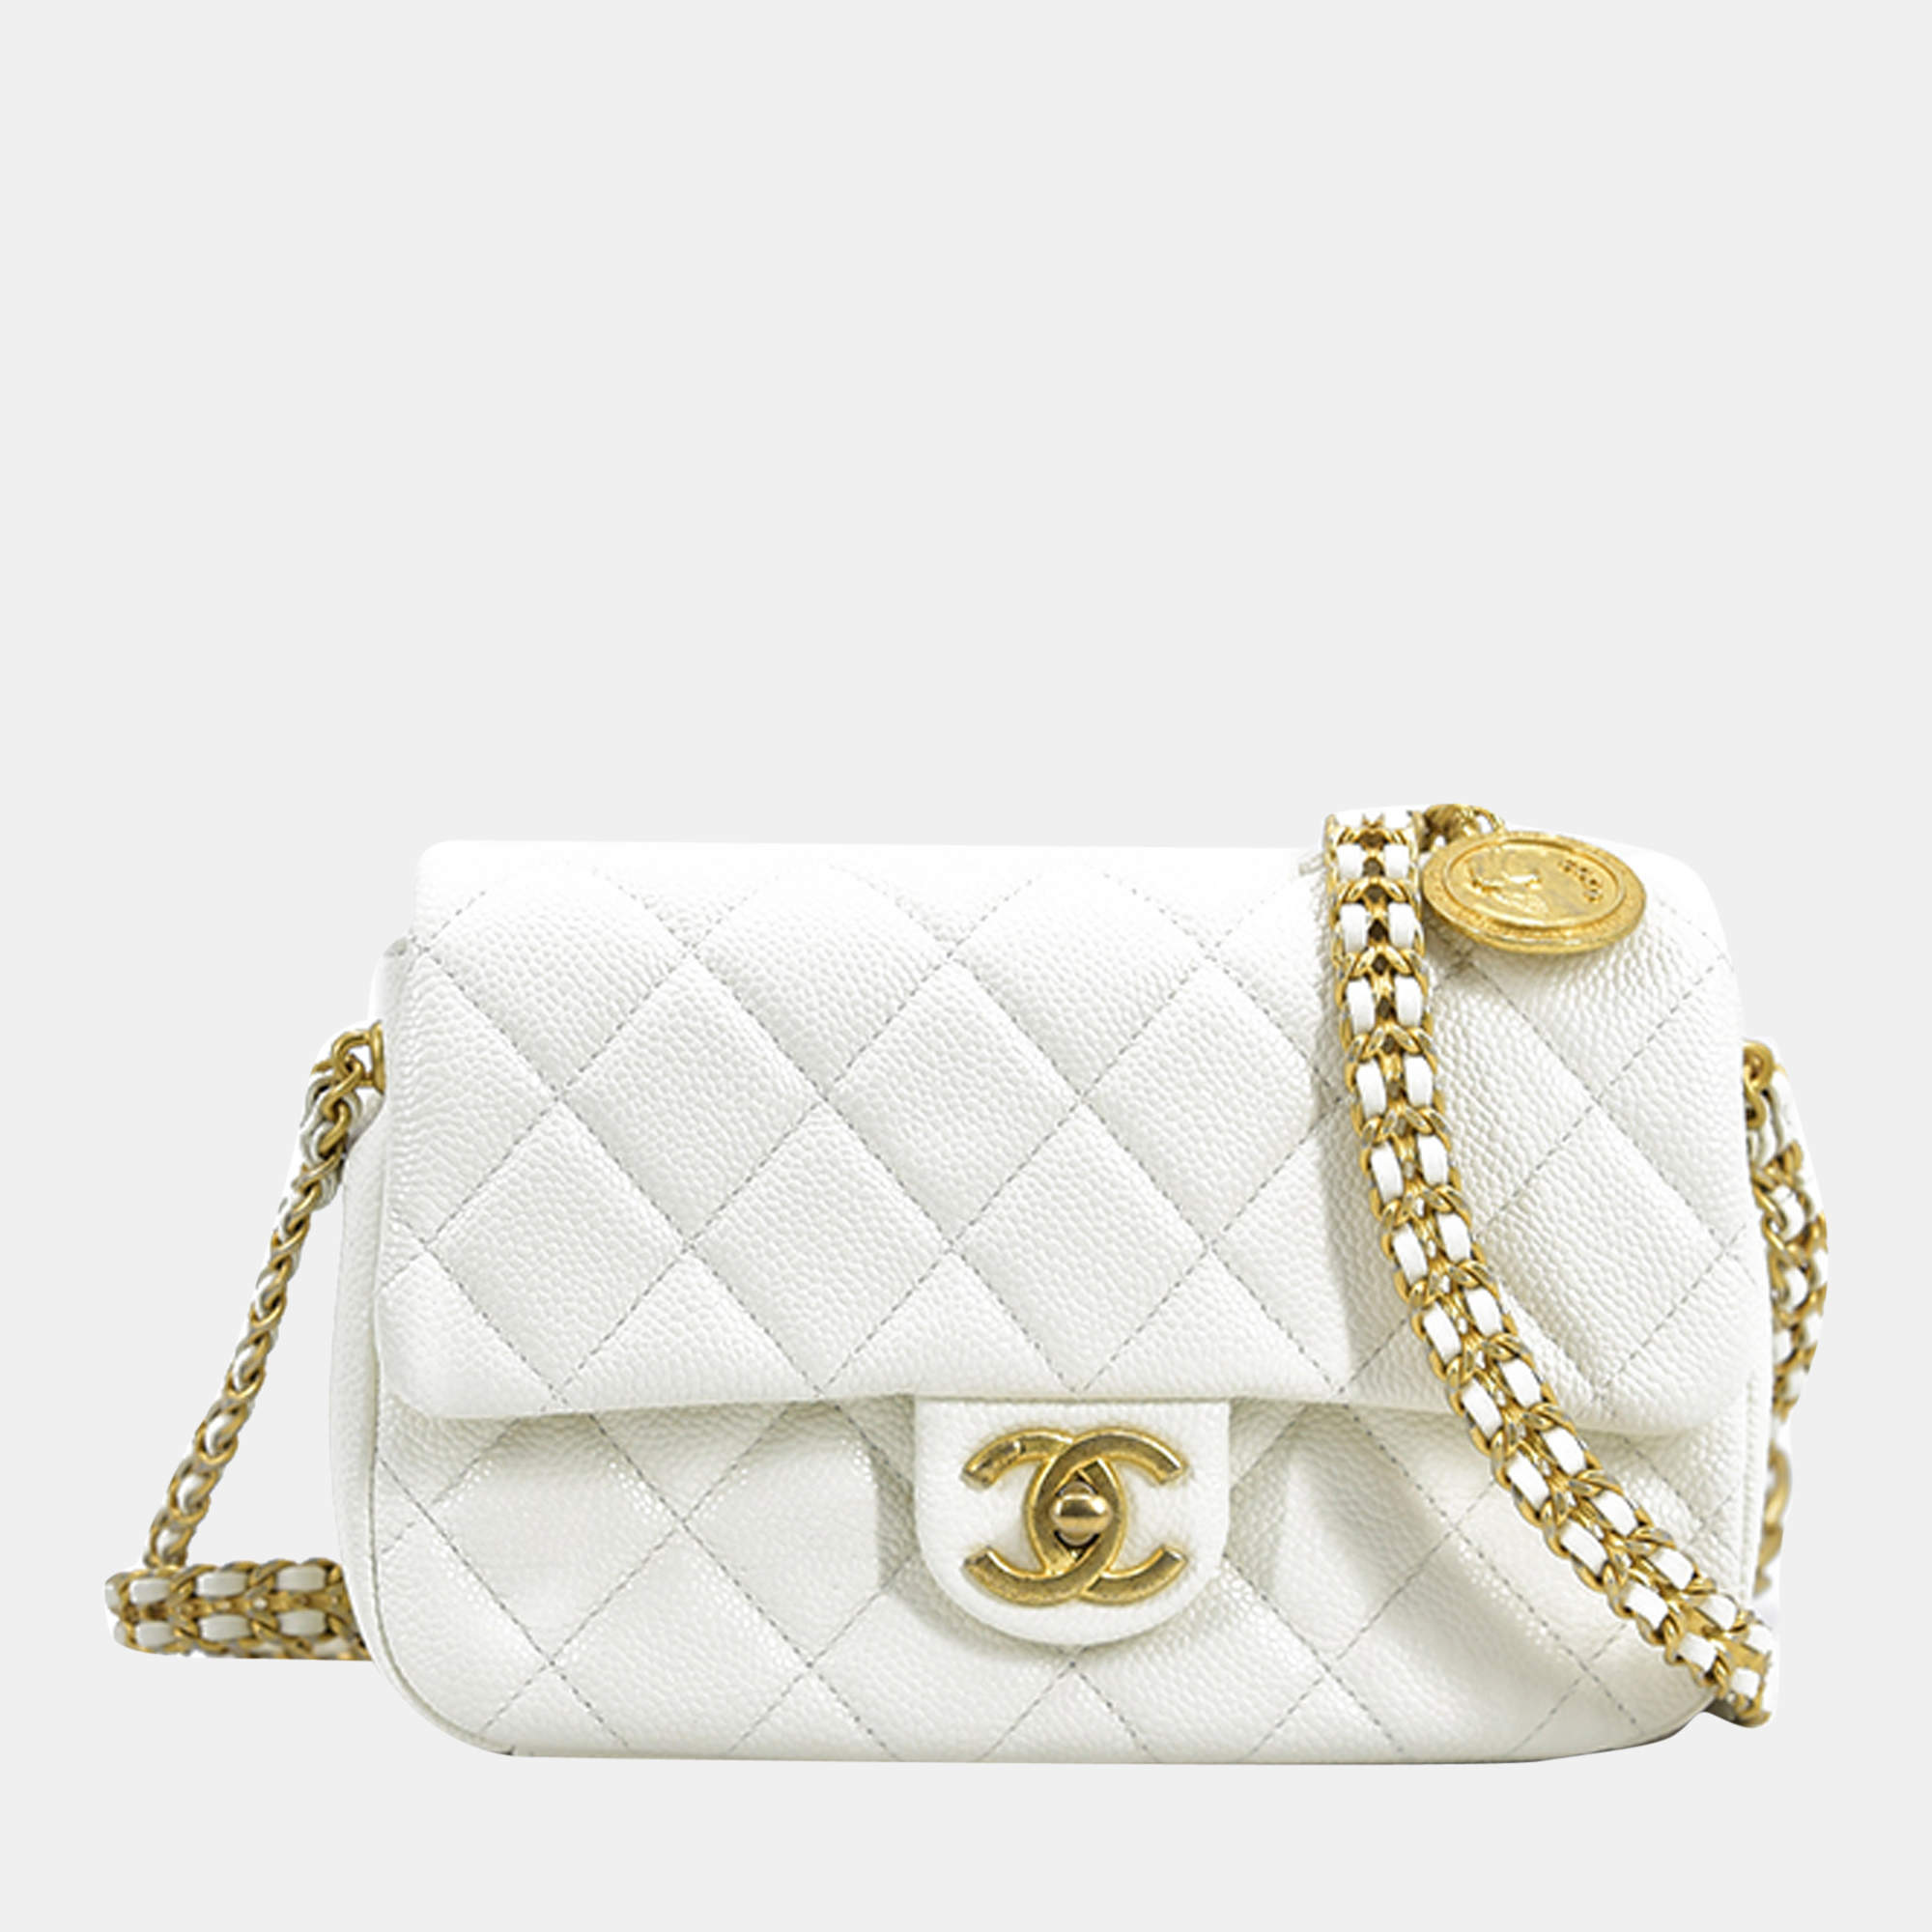 Timeless Superb Chanel Mini Classic Flap bag shoulder bag in white